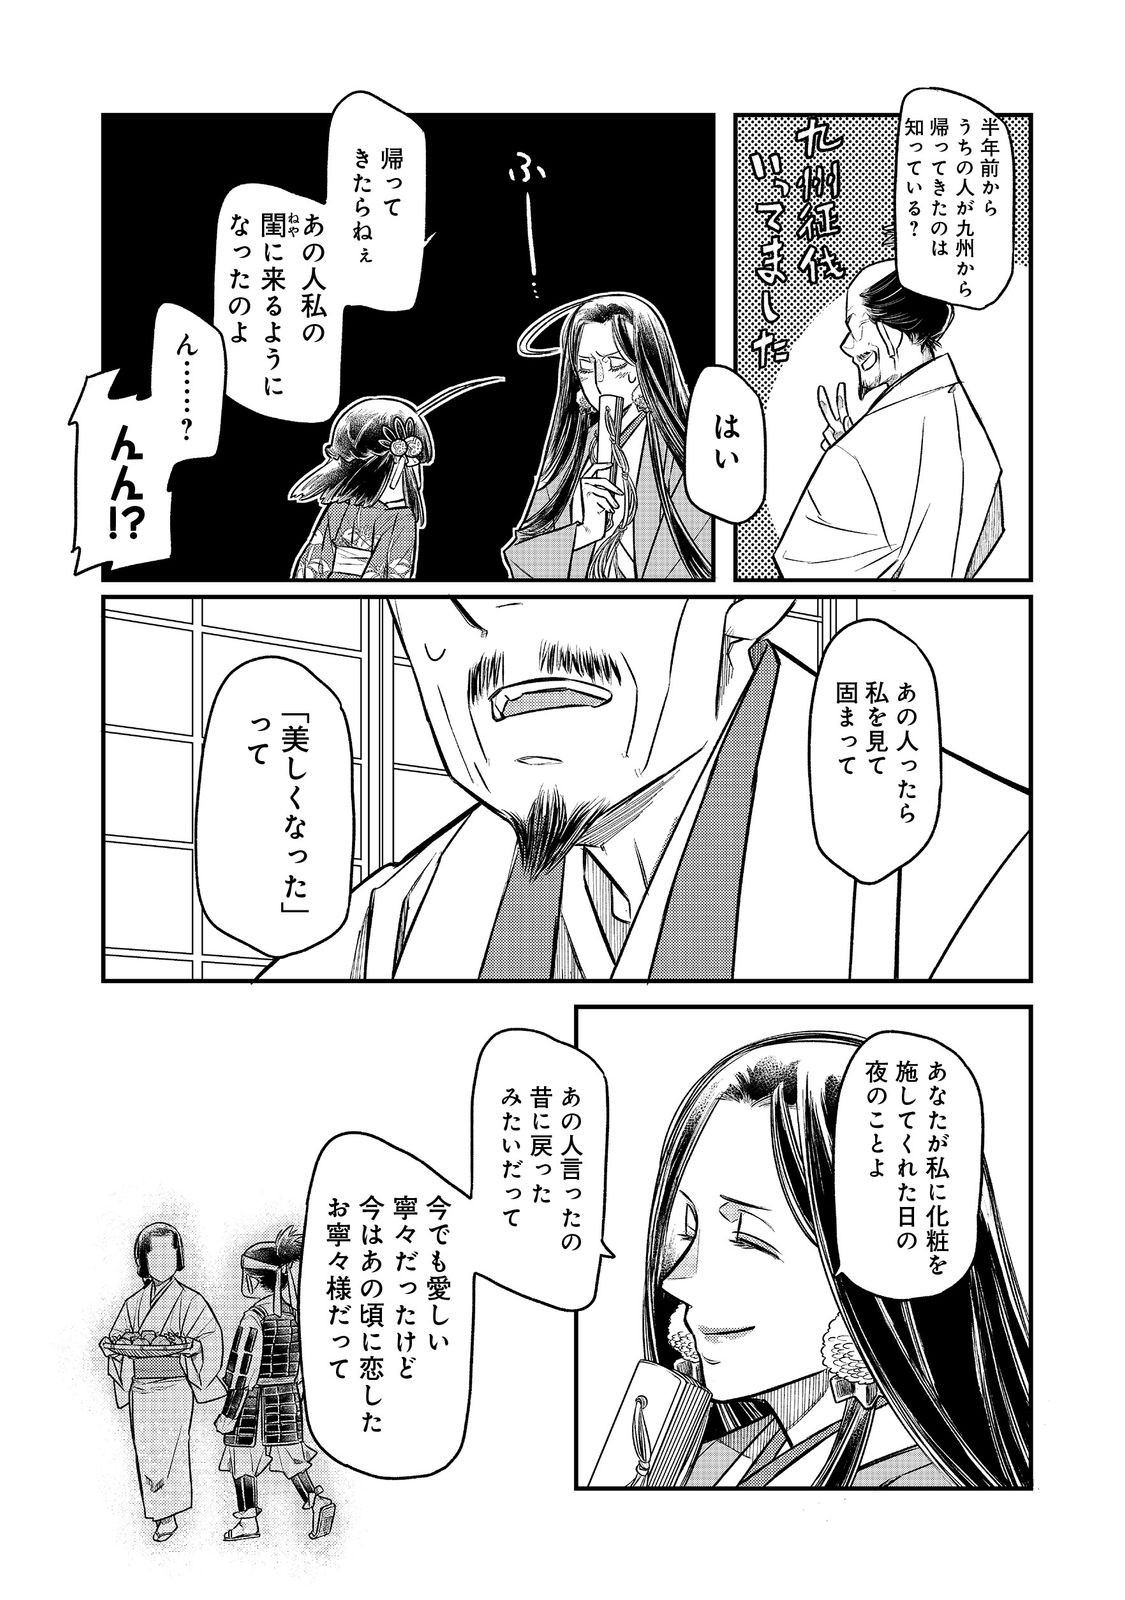 Kitanomandokoro-sama no Okeshougakari - Chapter 11.1 - Page 9